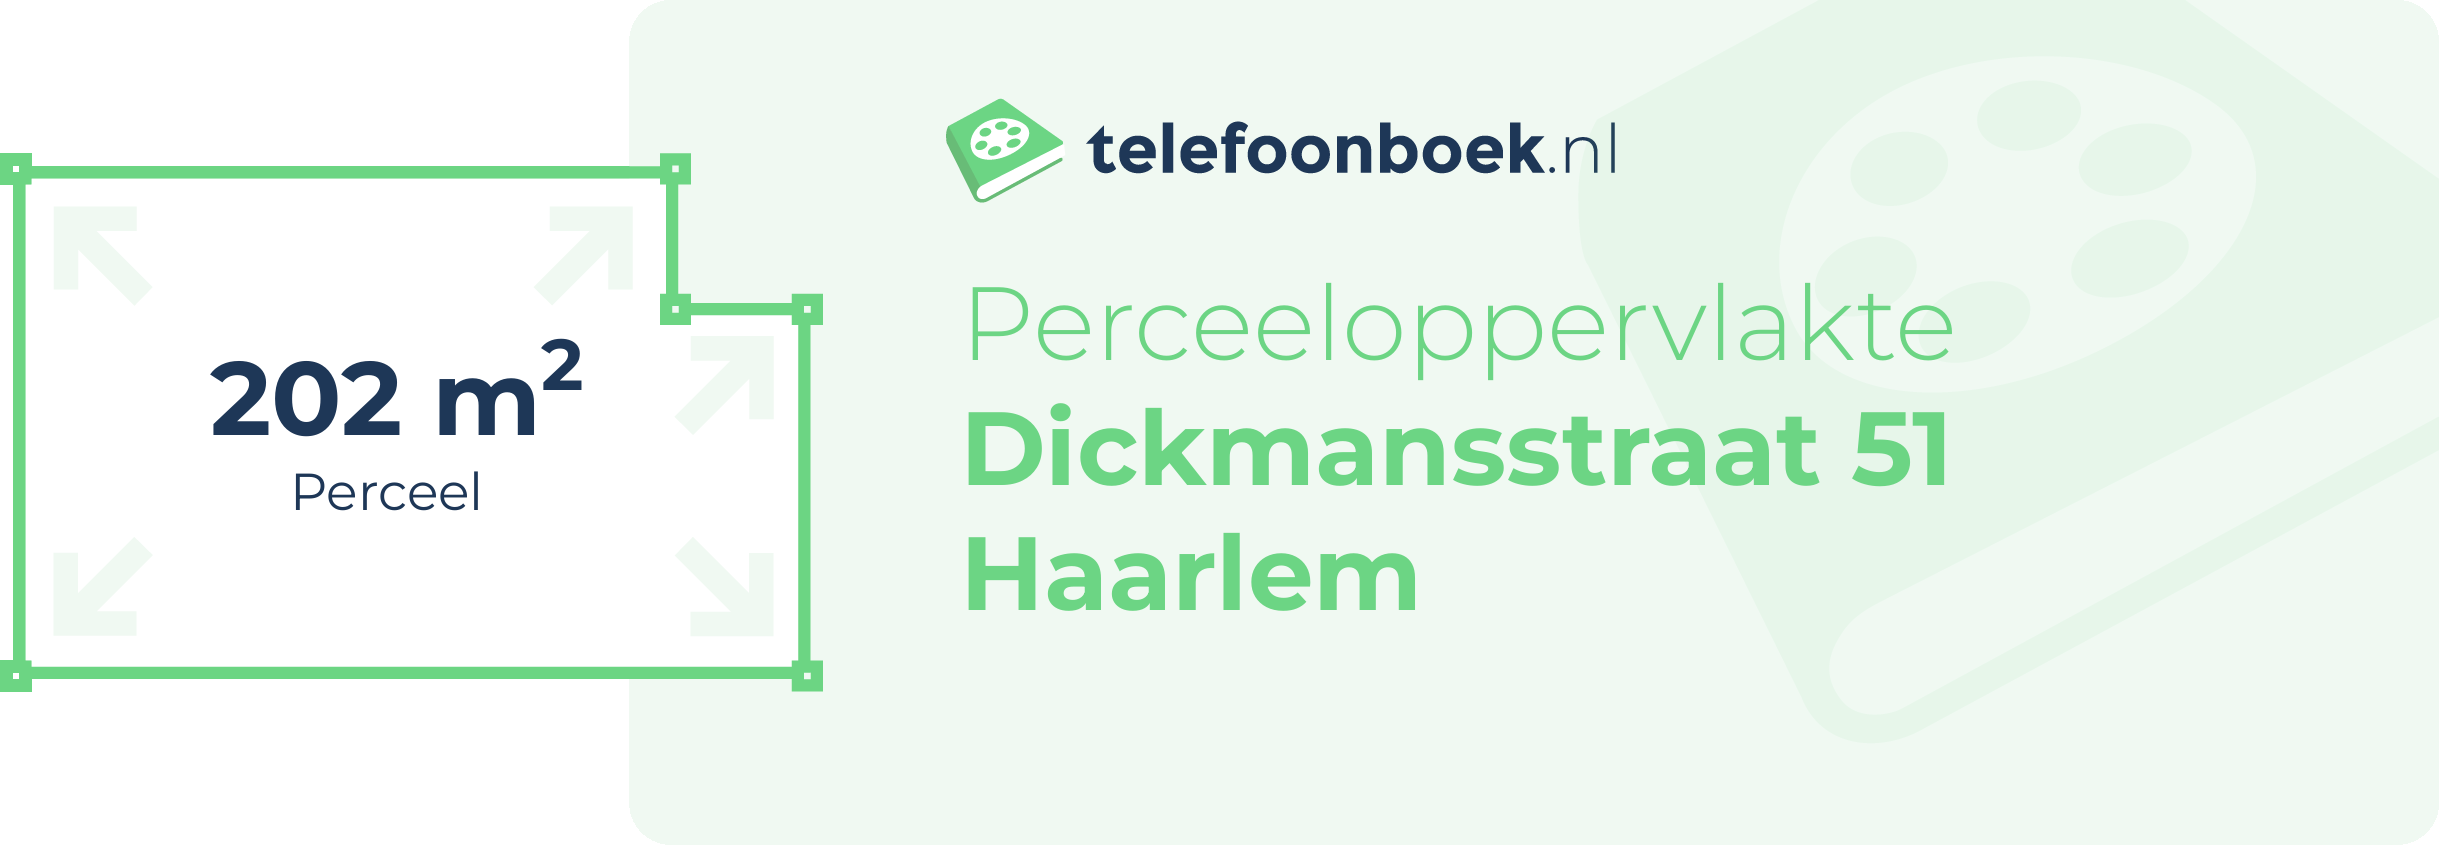 Perceeloppervlakte Dickmansstraat 51 Haarlem